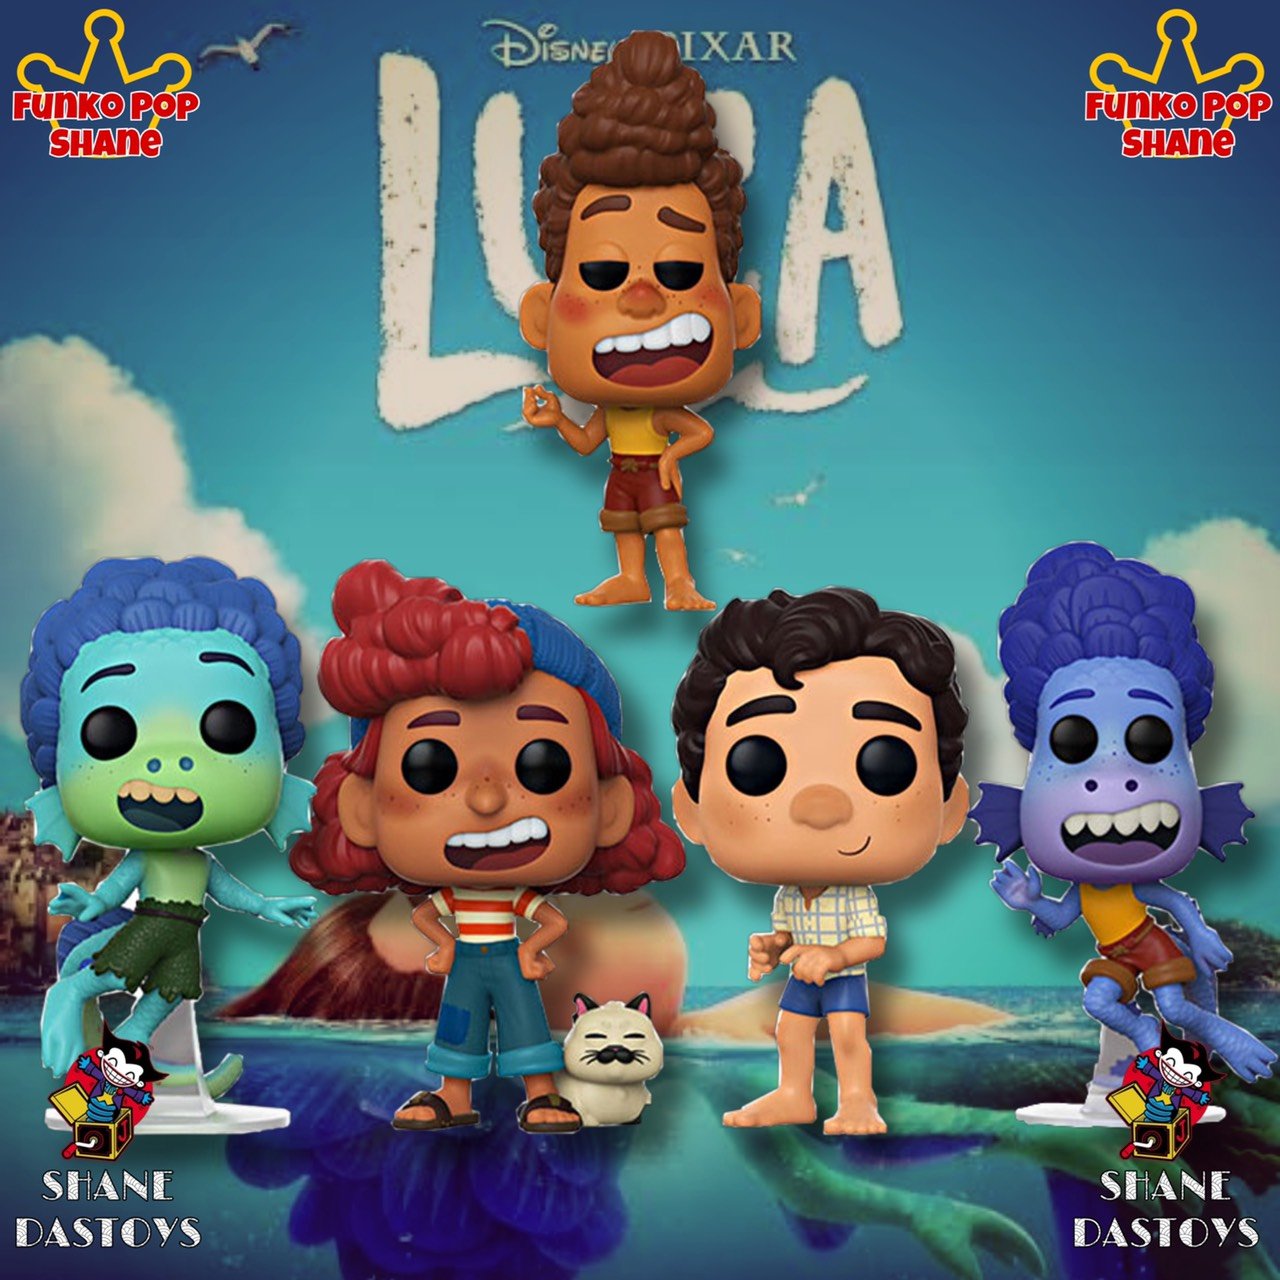 Funko Pop Luca Paguro ( Land ) - - Disney Pixar Luca - #1053